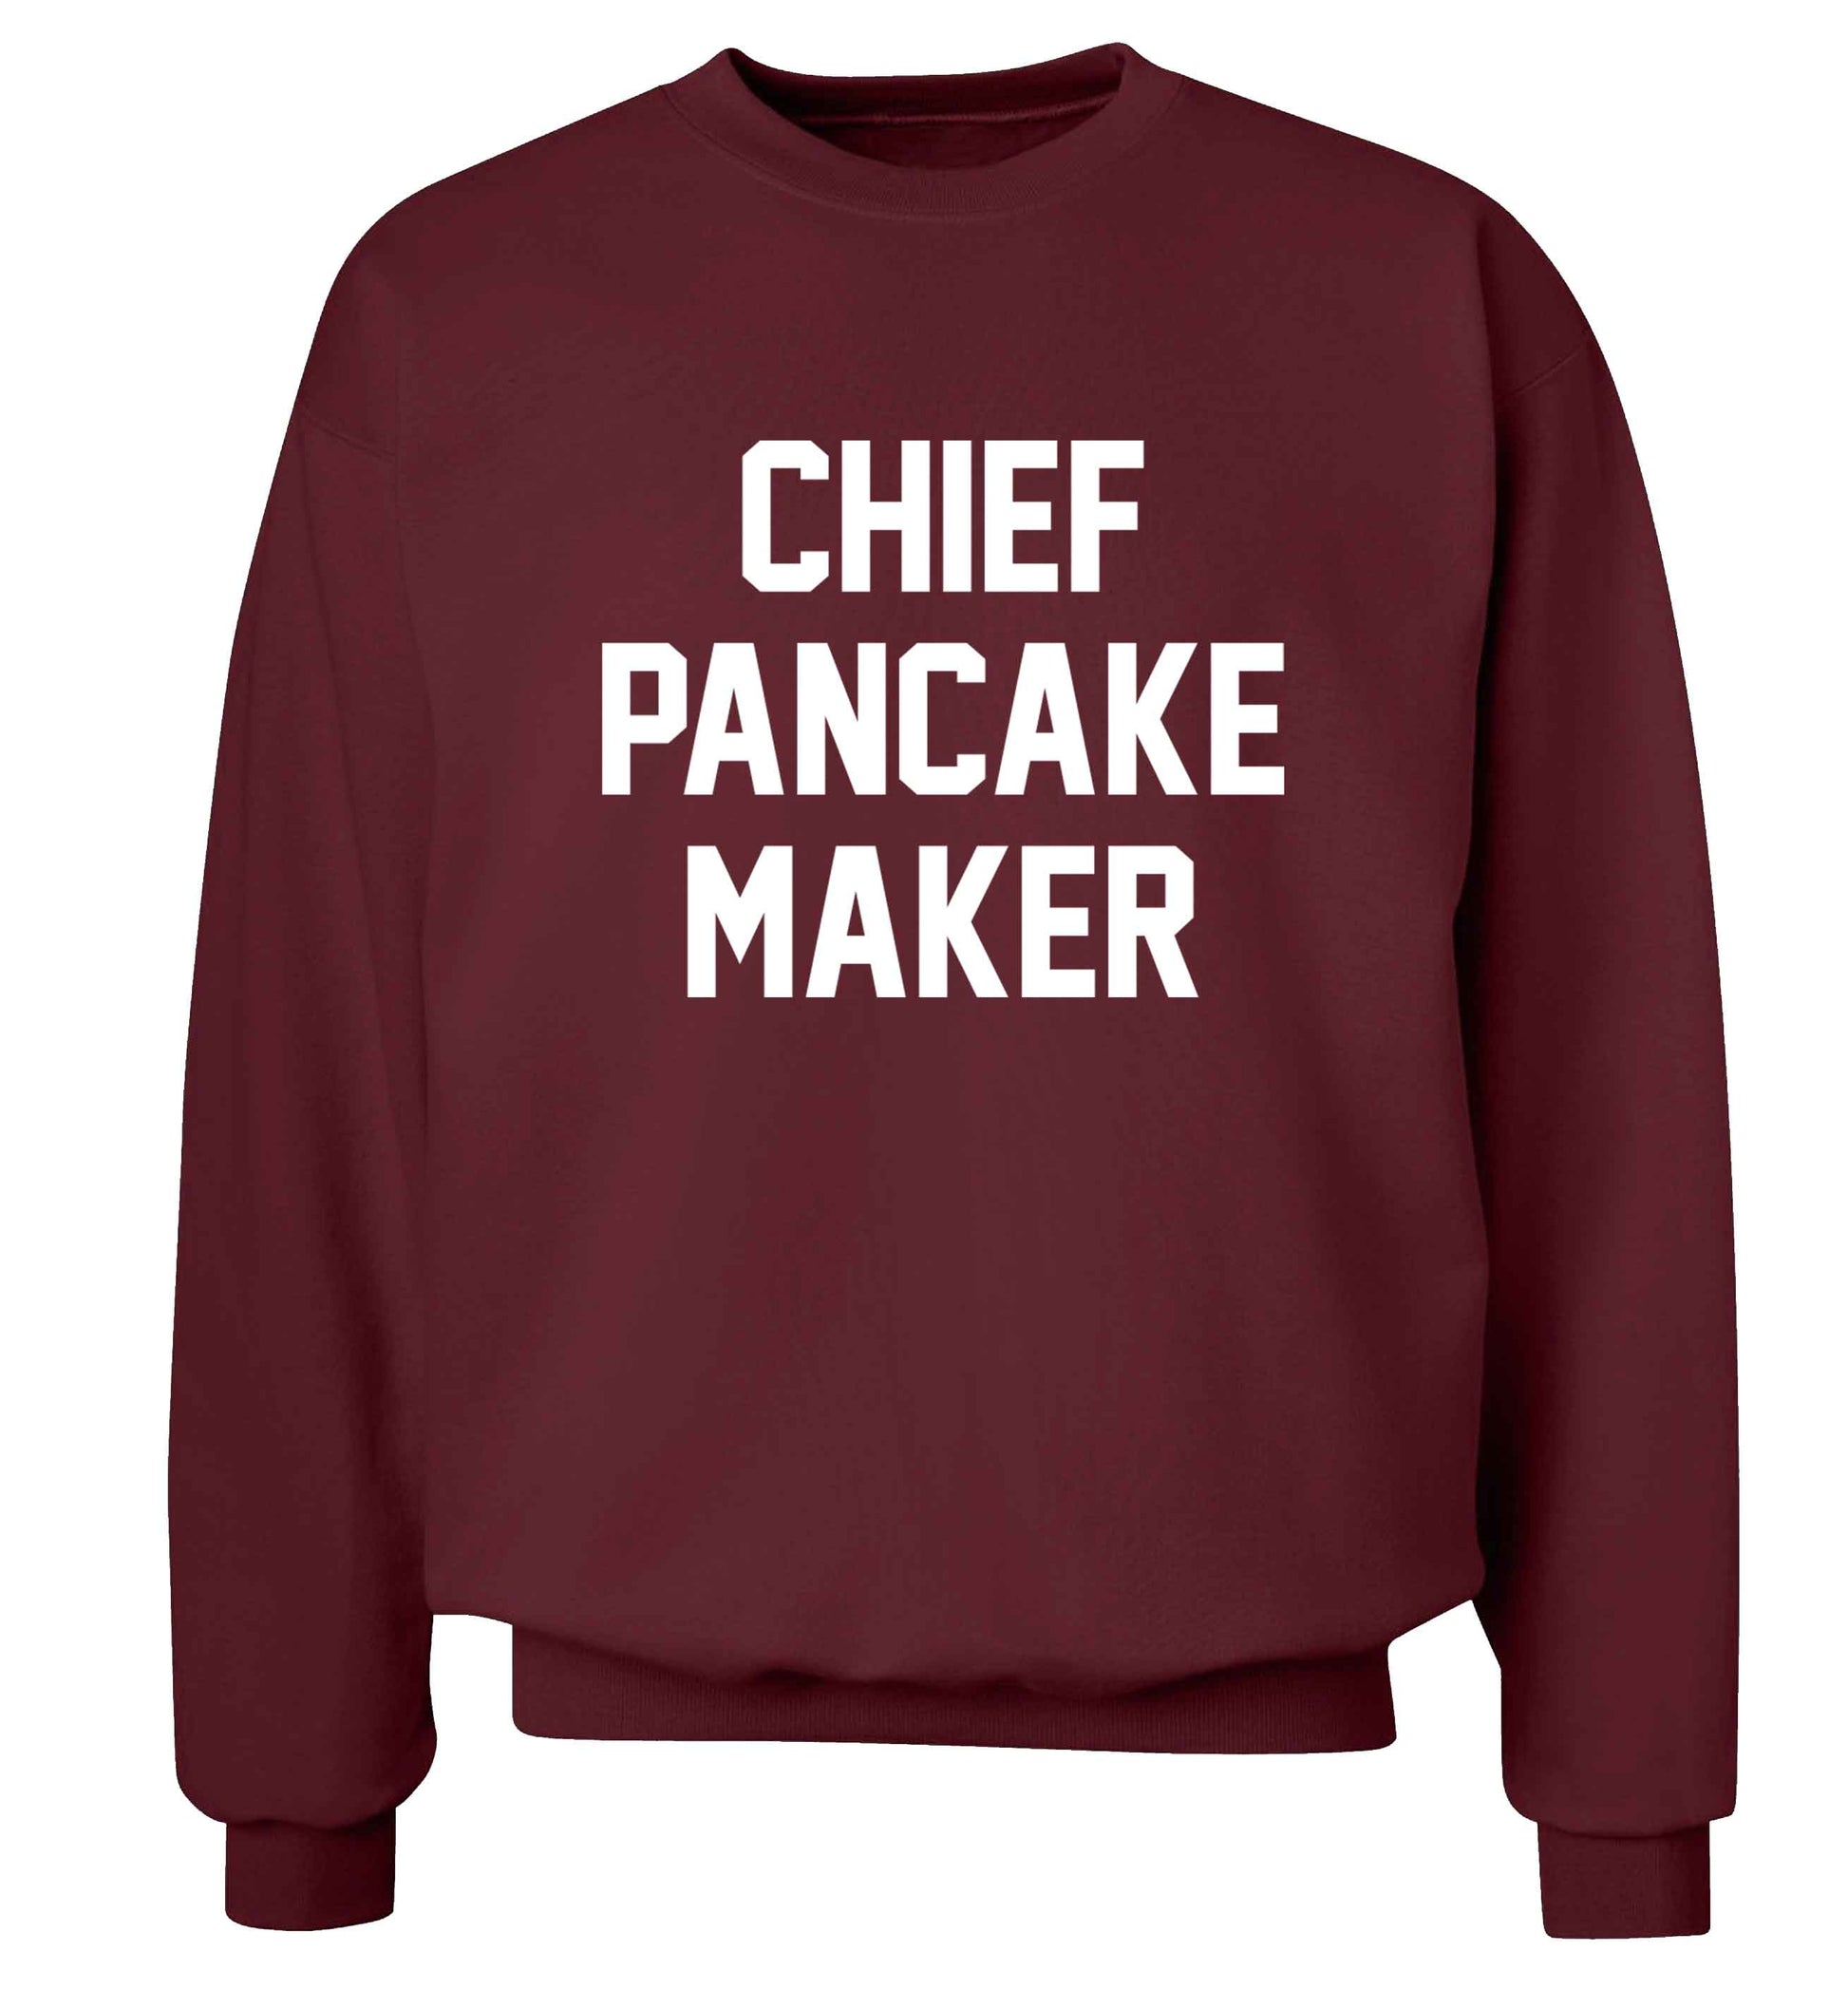 Chief pancake maker adult's unisex maroon sweater 2XL